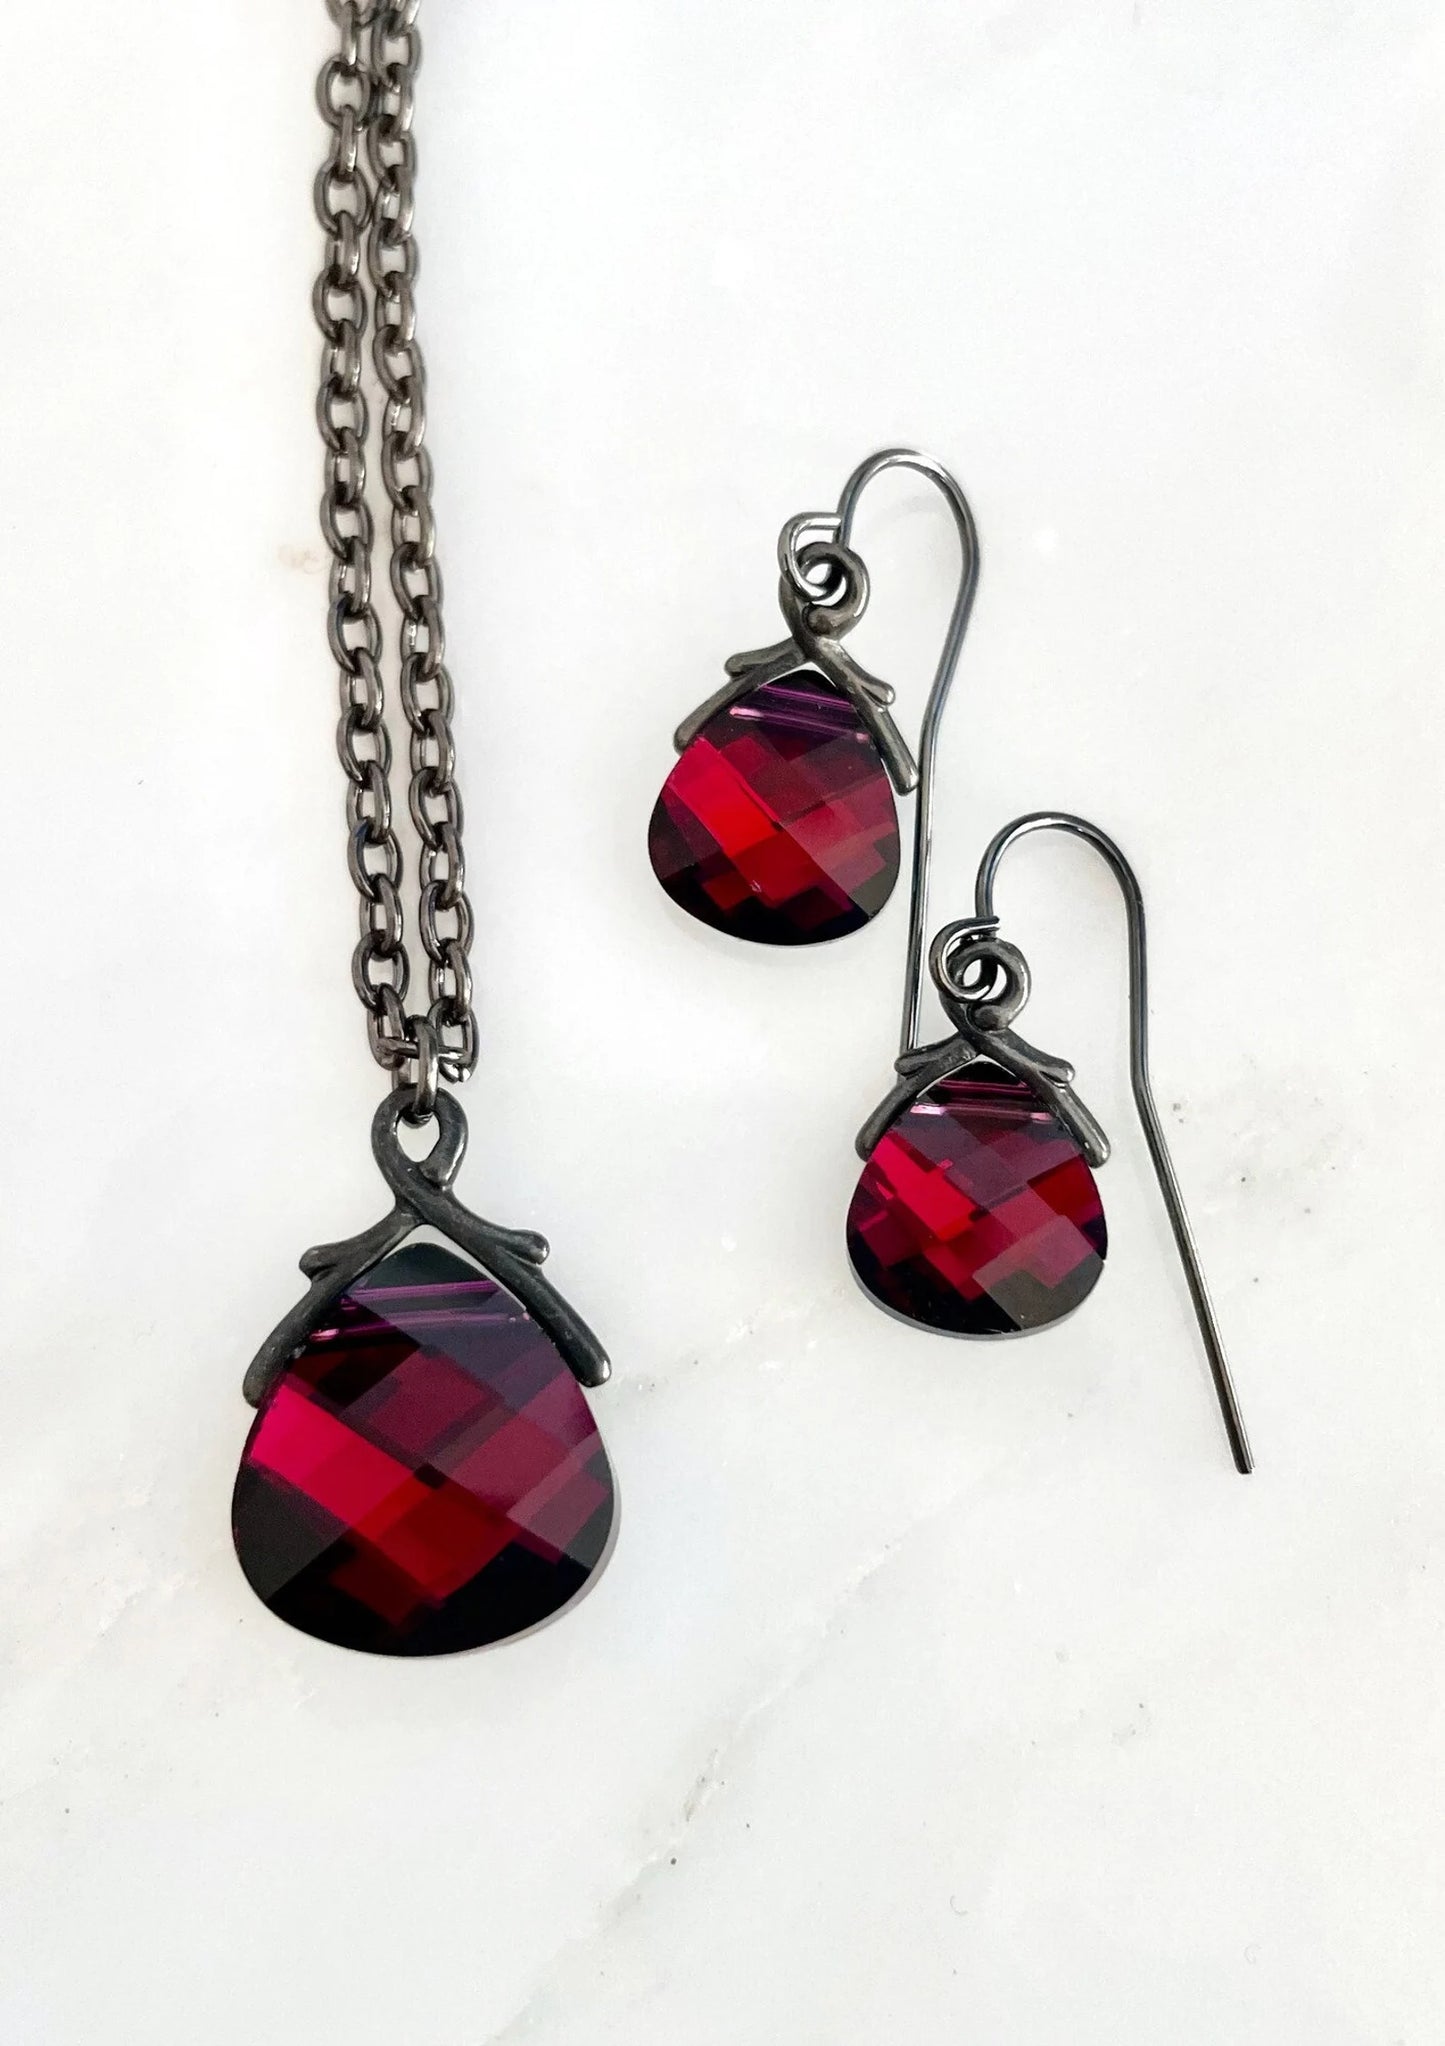 Ruby red Swarovski Crystal Flat Briolette earrings on gunmetal